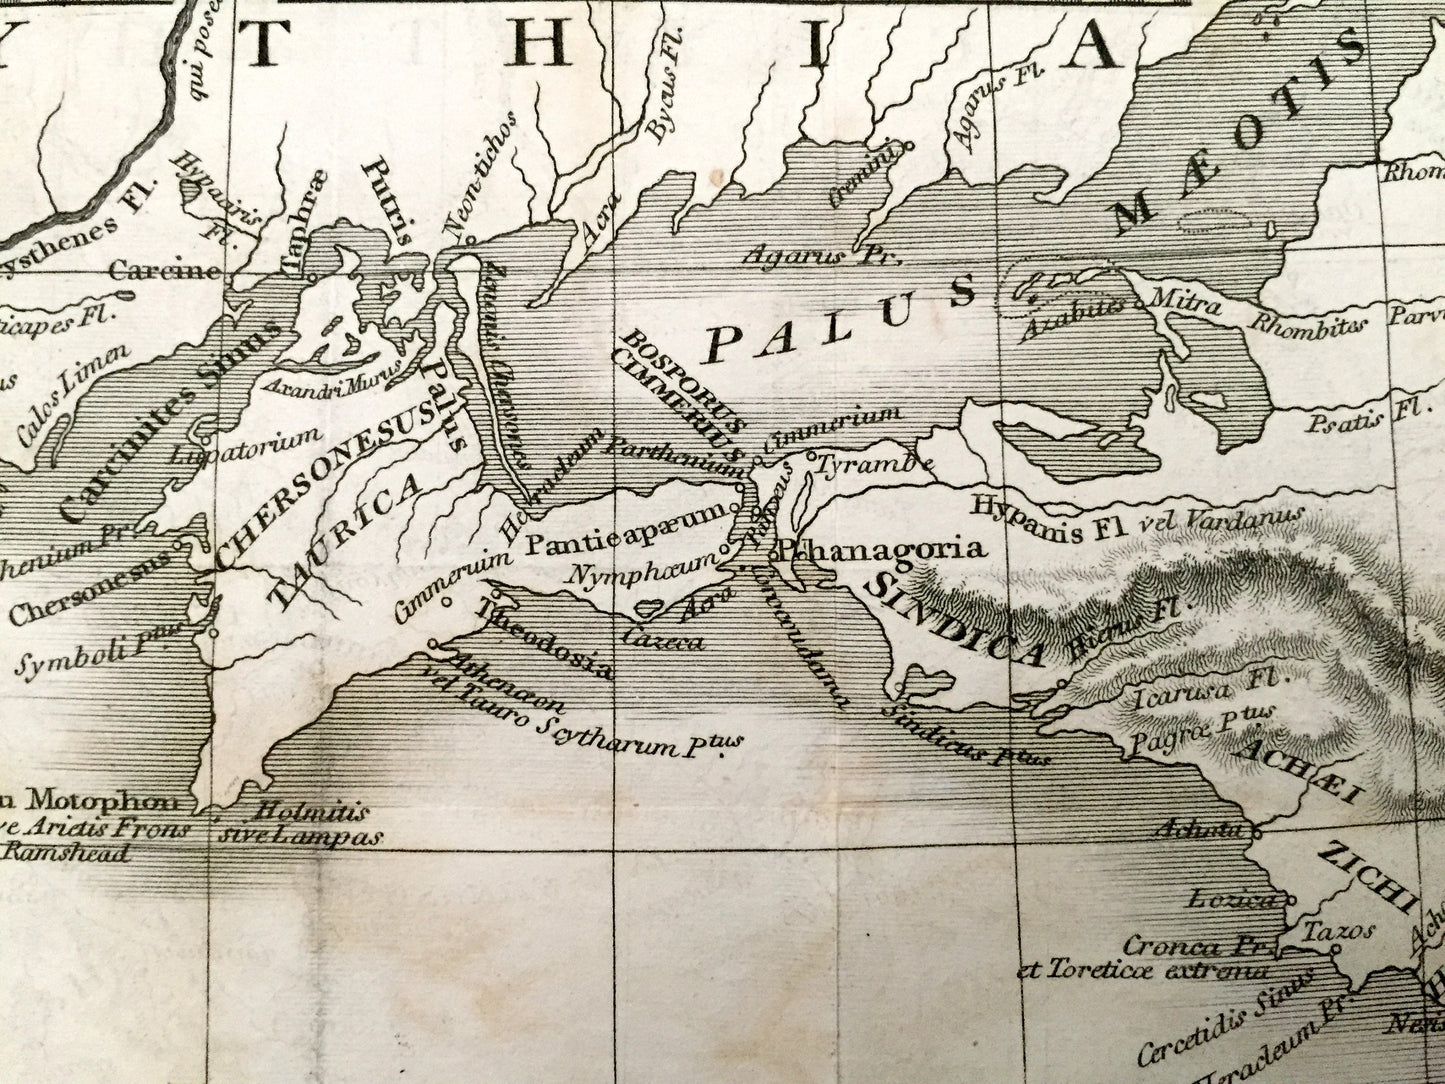 Antique 1808 Asia Minor Map by D'Anville from Rollins' Ancient History – Turkey, Istanbul, Ankara, Black Sea, Georgia, Romania, Crimea